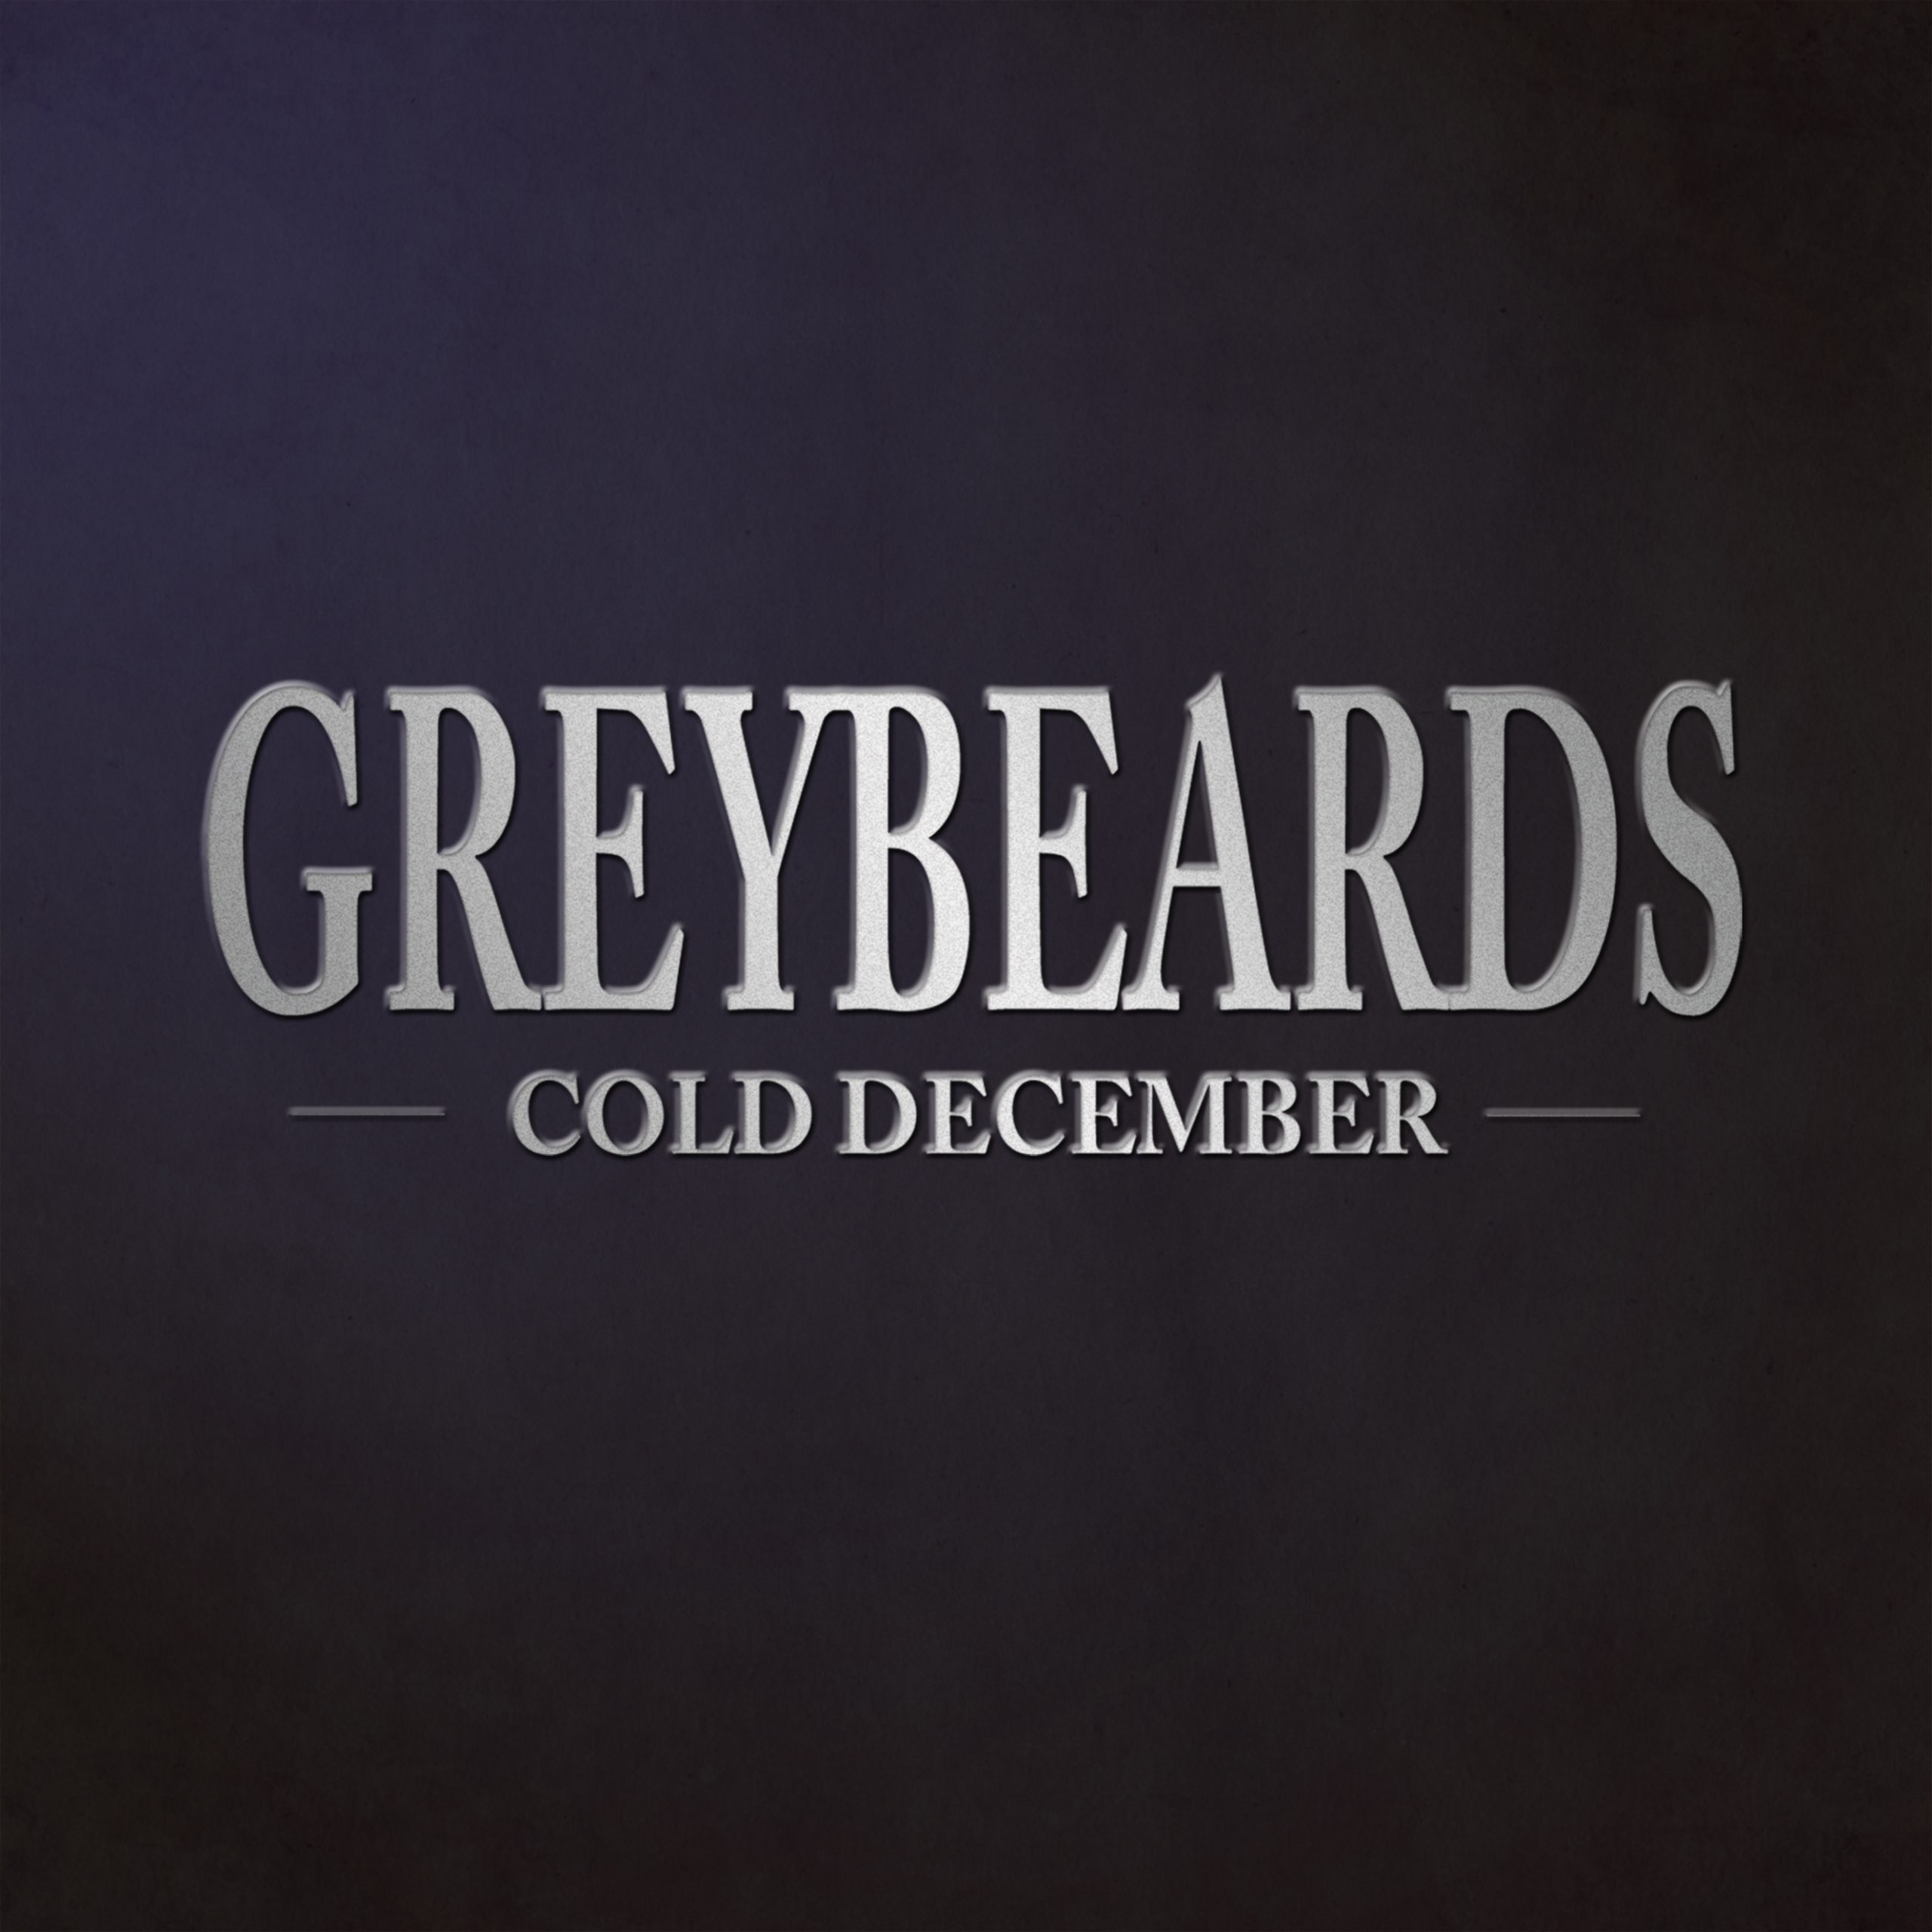 Cold december. Greybeards.